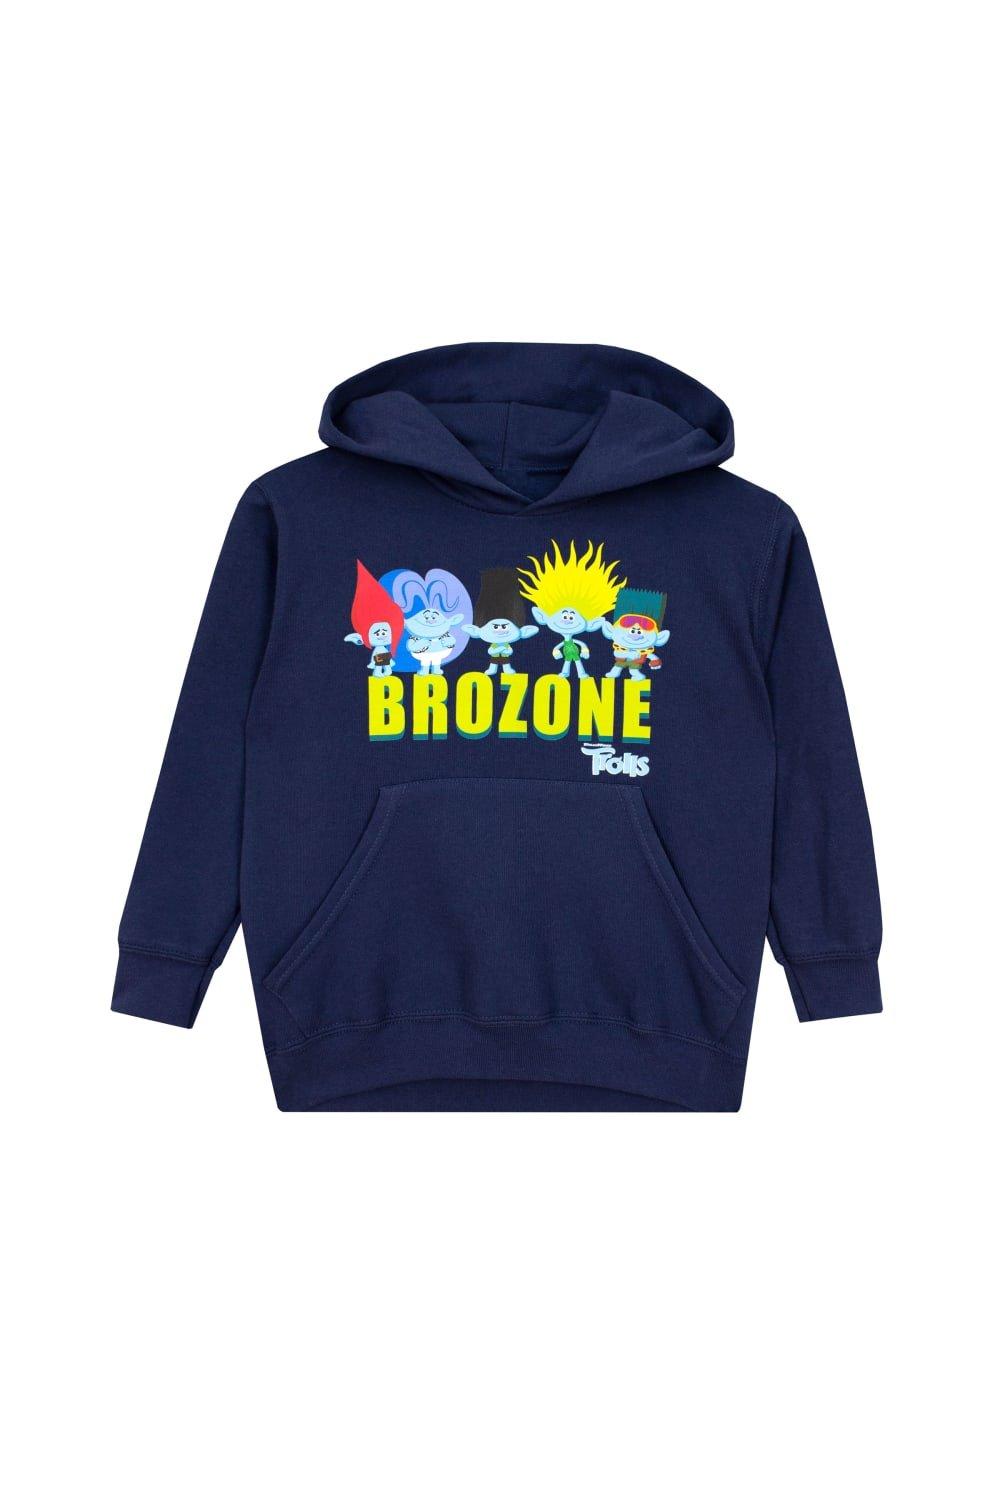 BroZone Band Hoodie